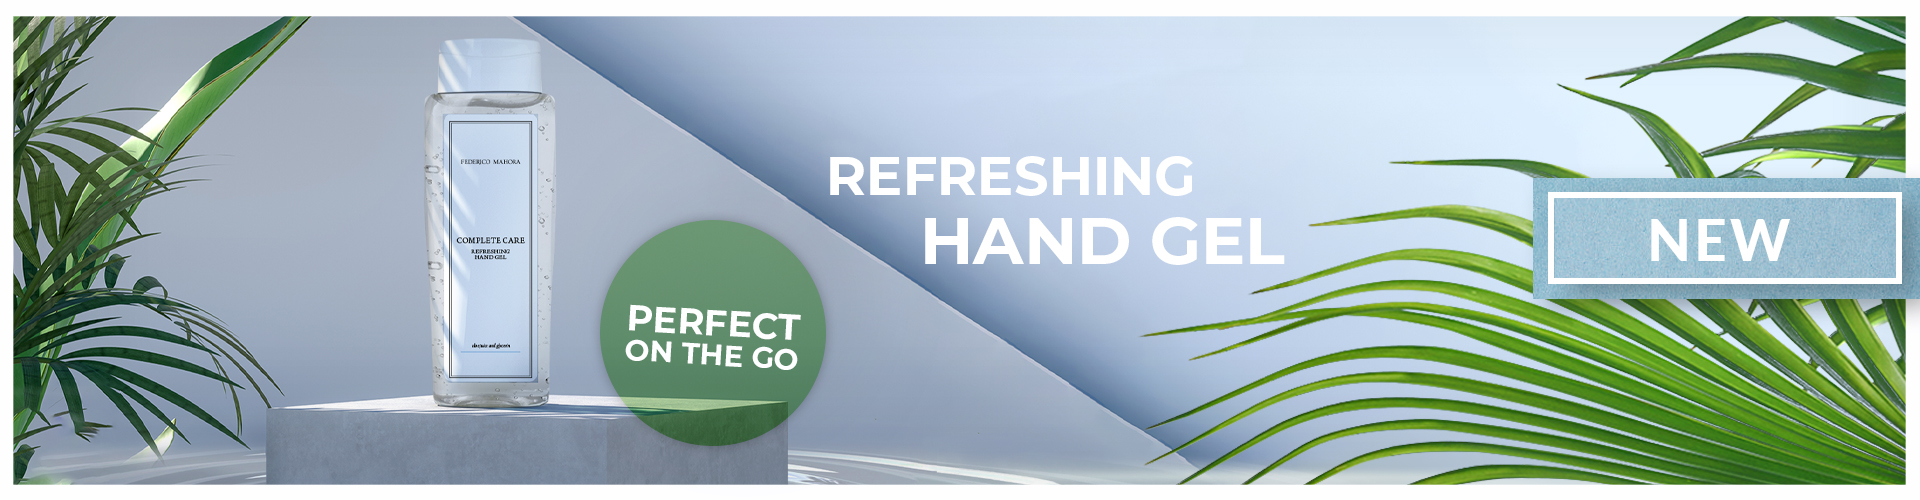 refreshing hand gel 